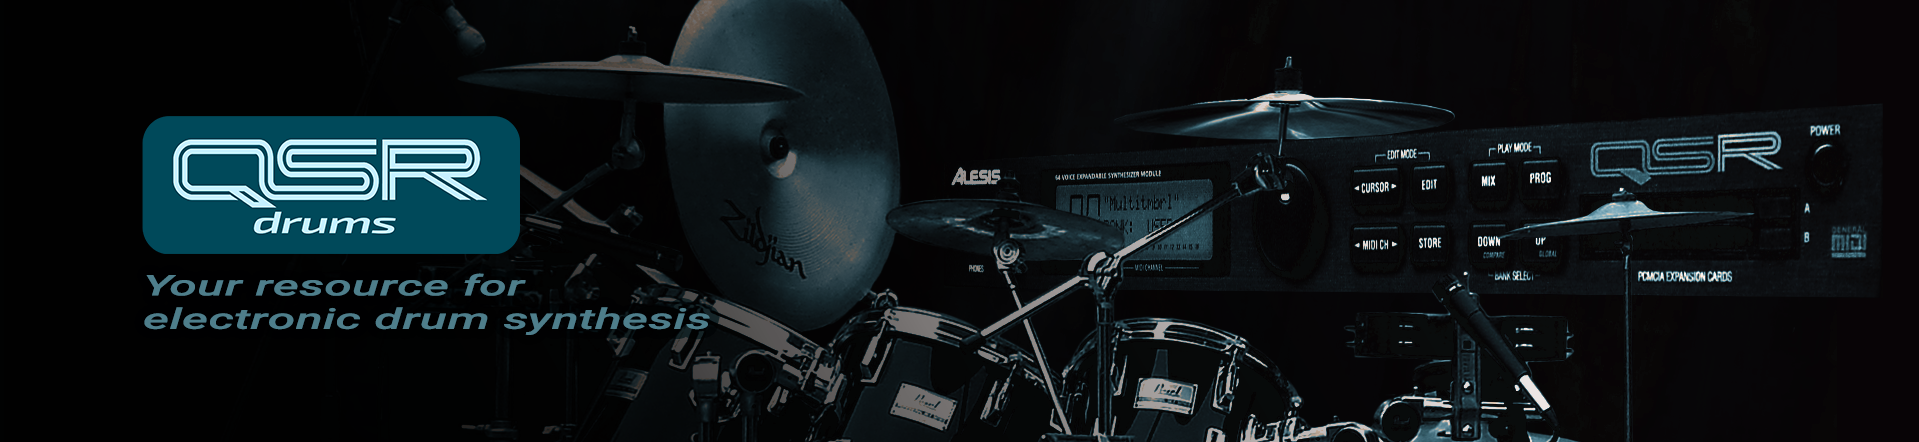 QSR drums home page banner image